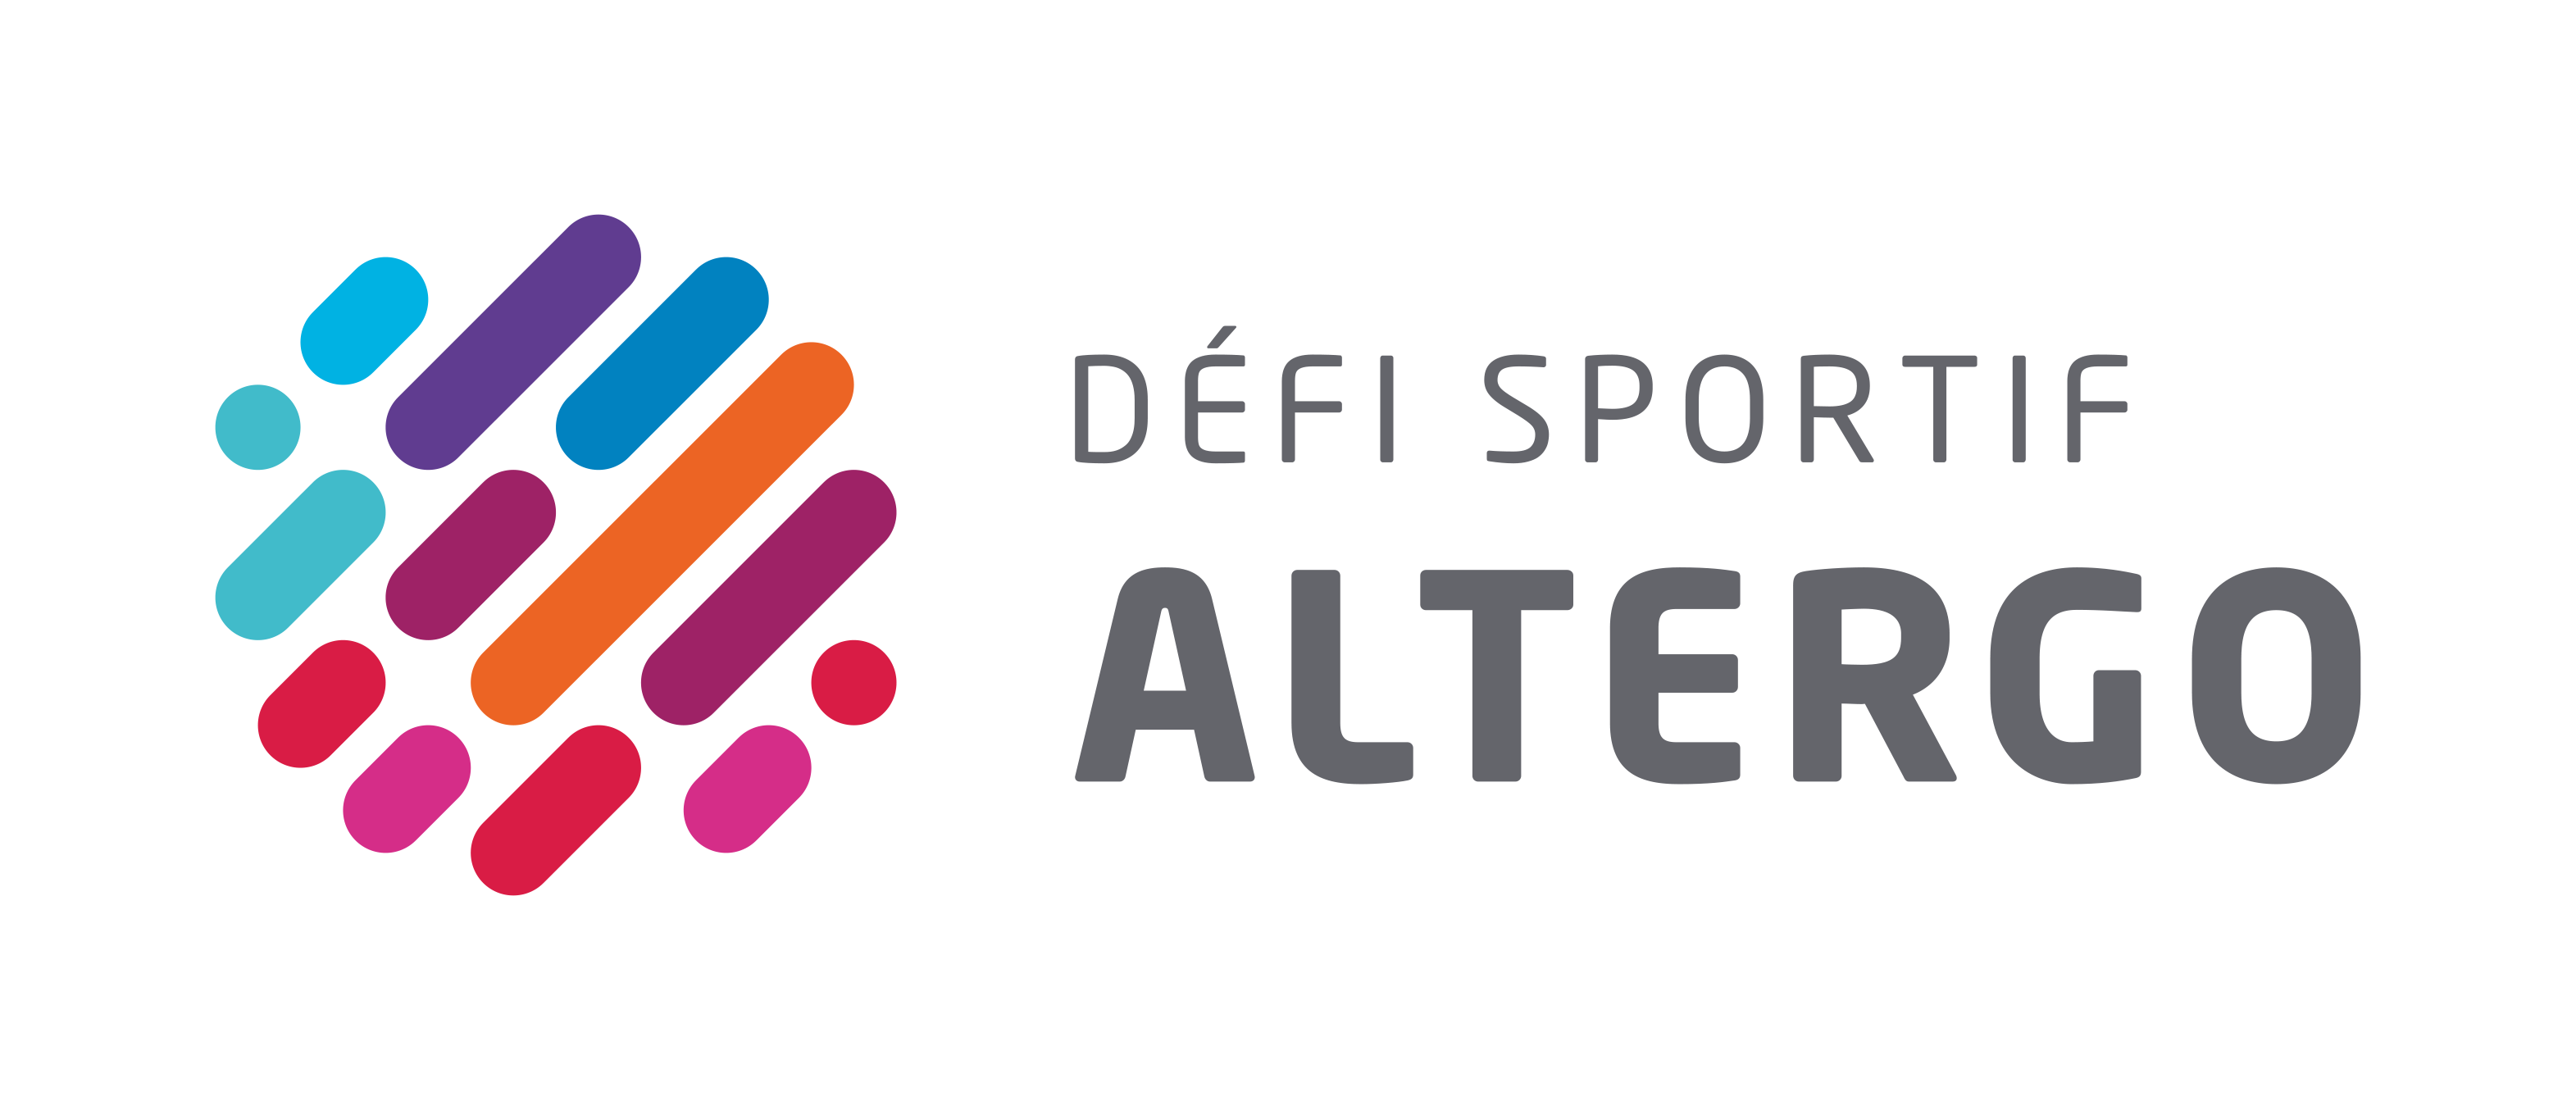 Défi sportif AlterGo - the largest multi-sport event in Canada